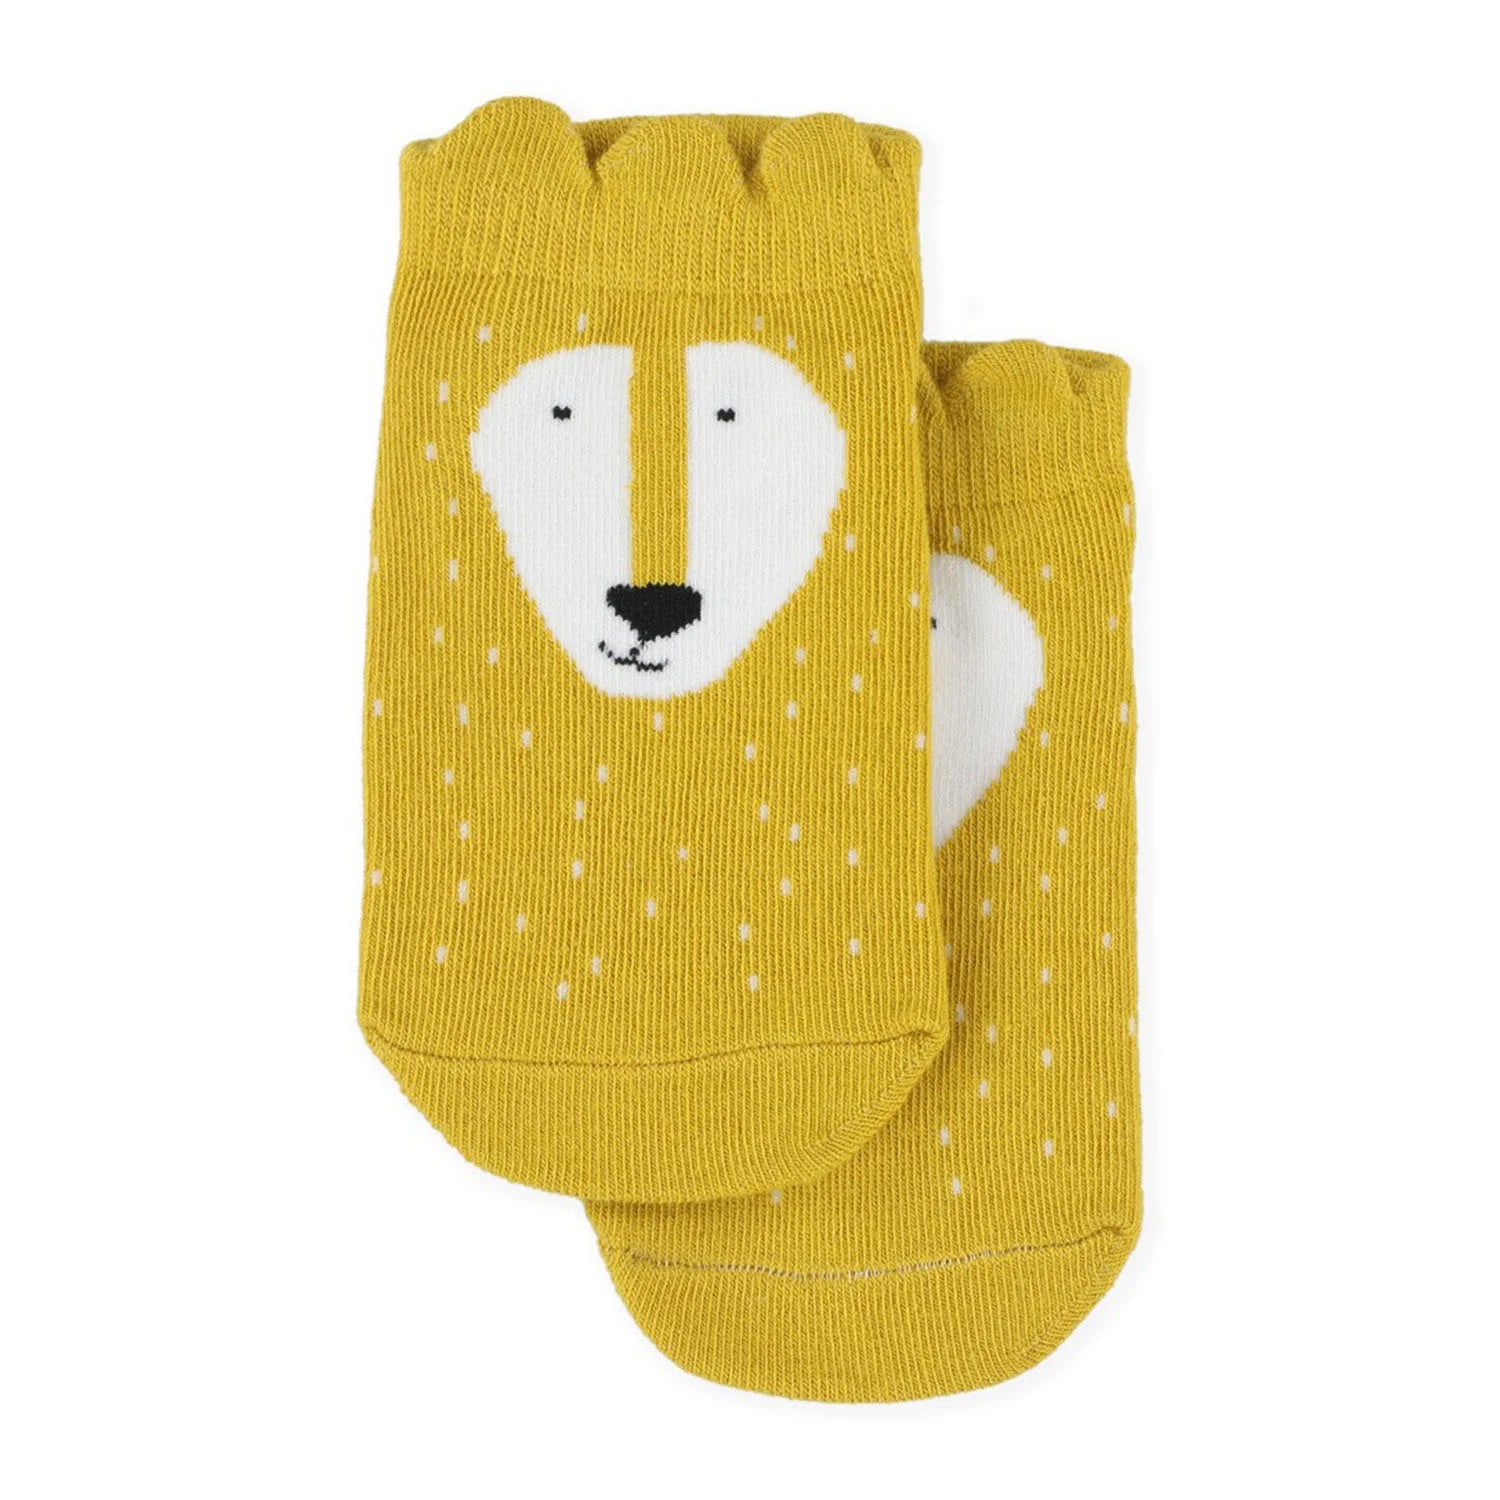 An image of Kids Socks - 2 Pack Socks - Mr Lion Socks | Trixie 25/27